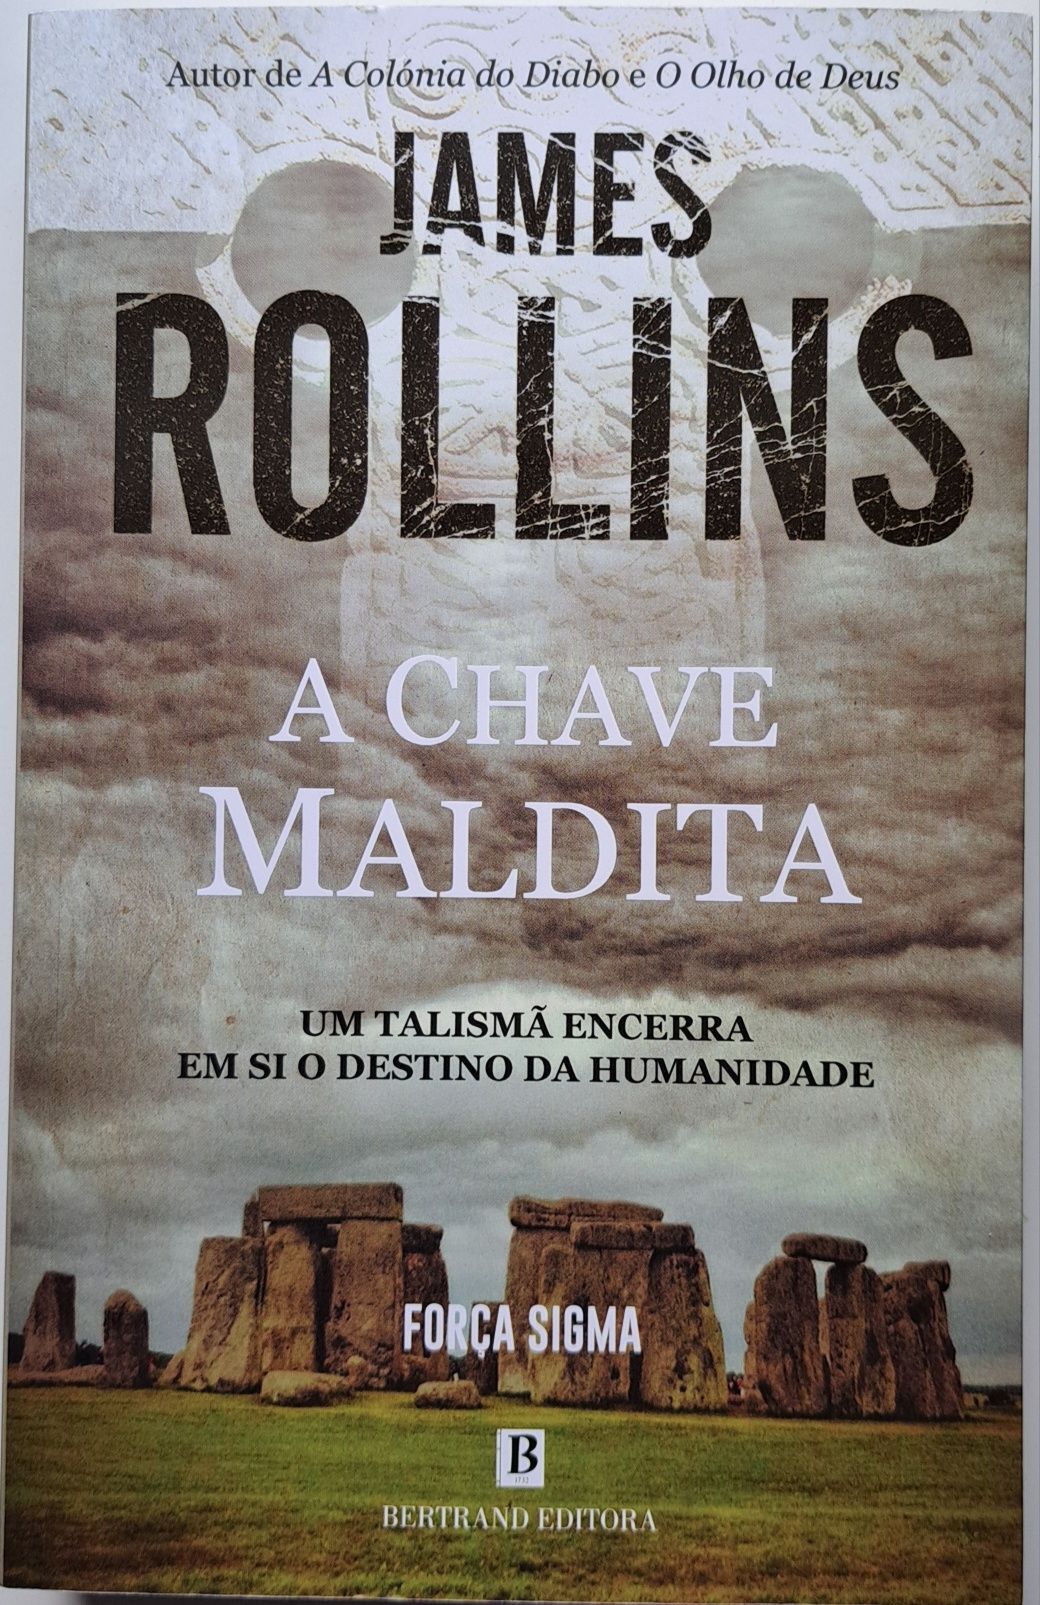 A Chave Maldita de James Rollins